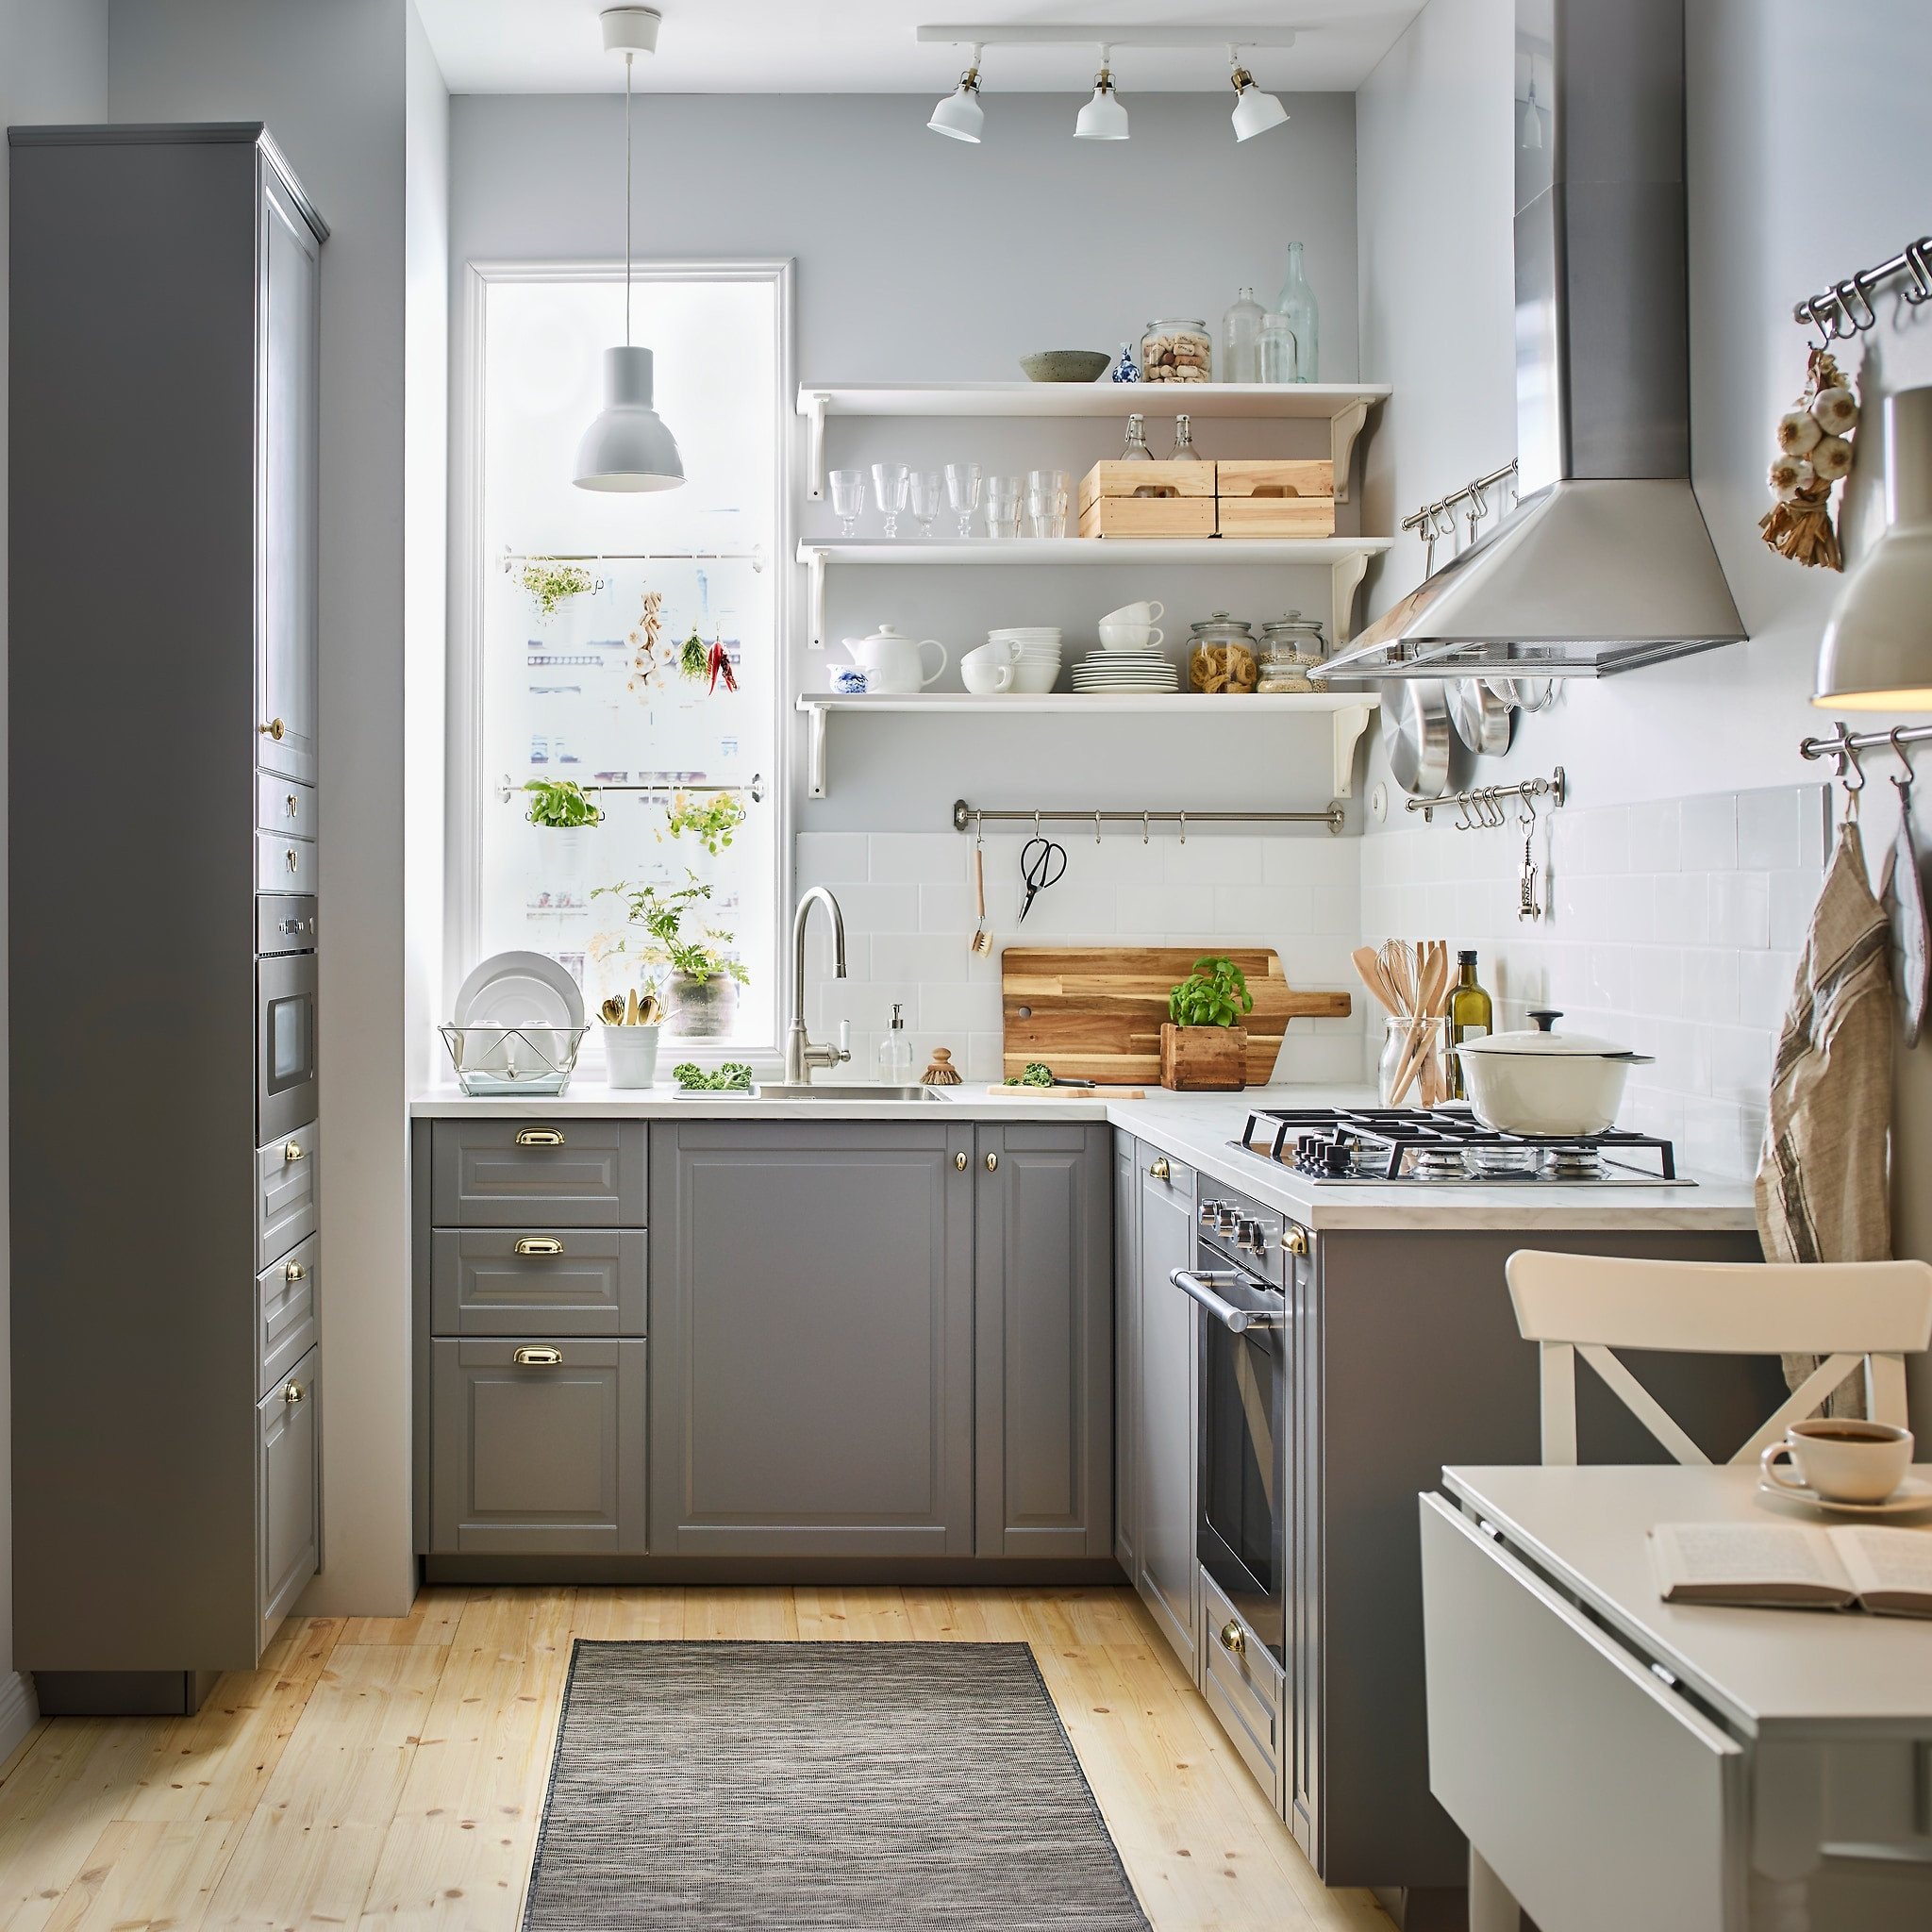 Best ideas about Ikea Kitchen Ideas
. Save or Pin Kitchens Kitchen Ideas & Inspiration Now.